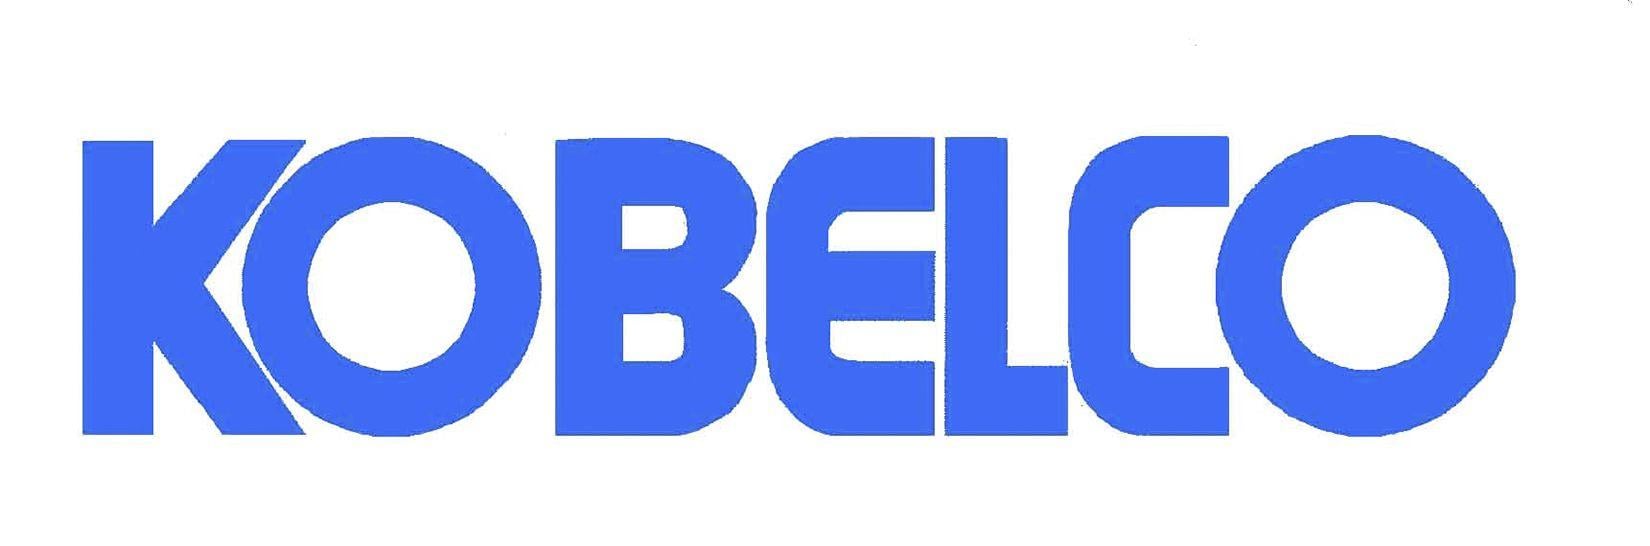 Kobelco Logo - KOBELCO Construction Machinery and KOBELCO Cranes to Merge | 2016-02 ...